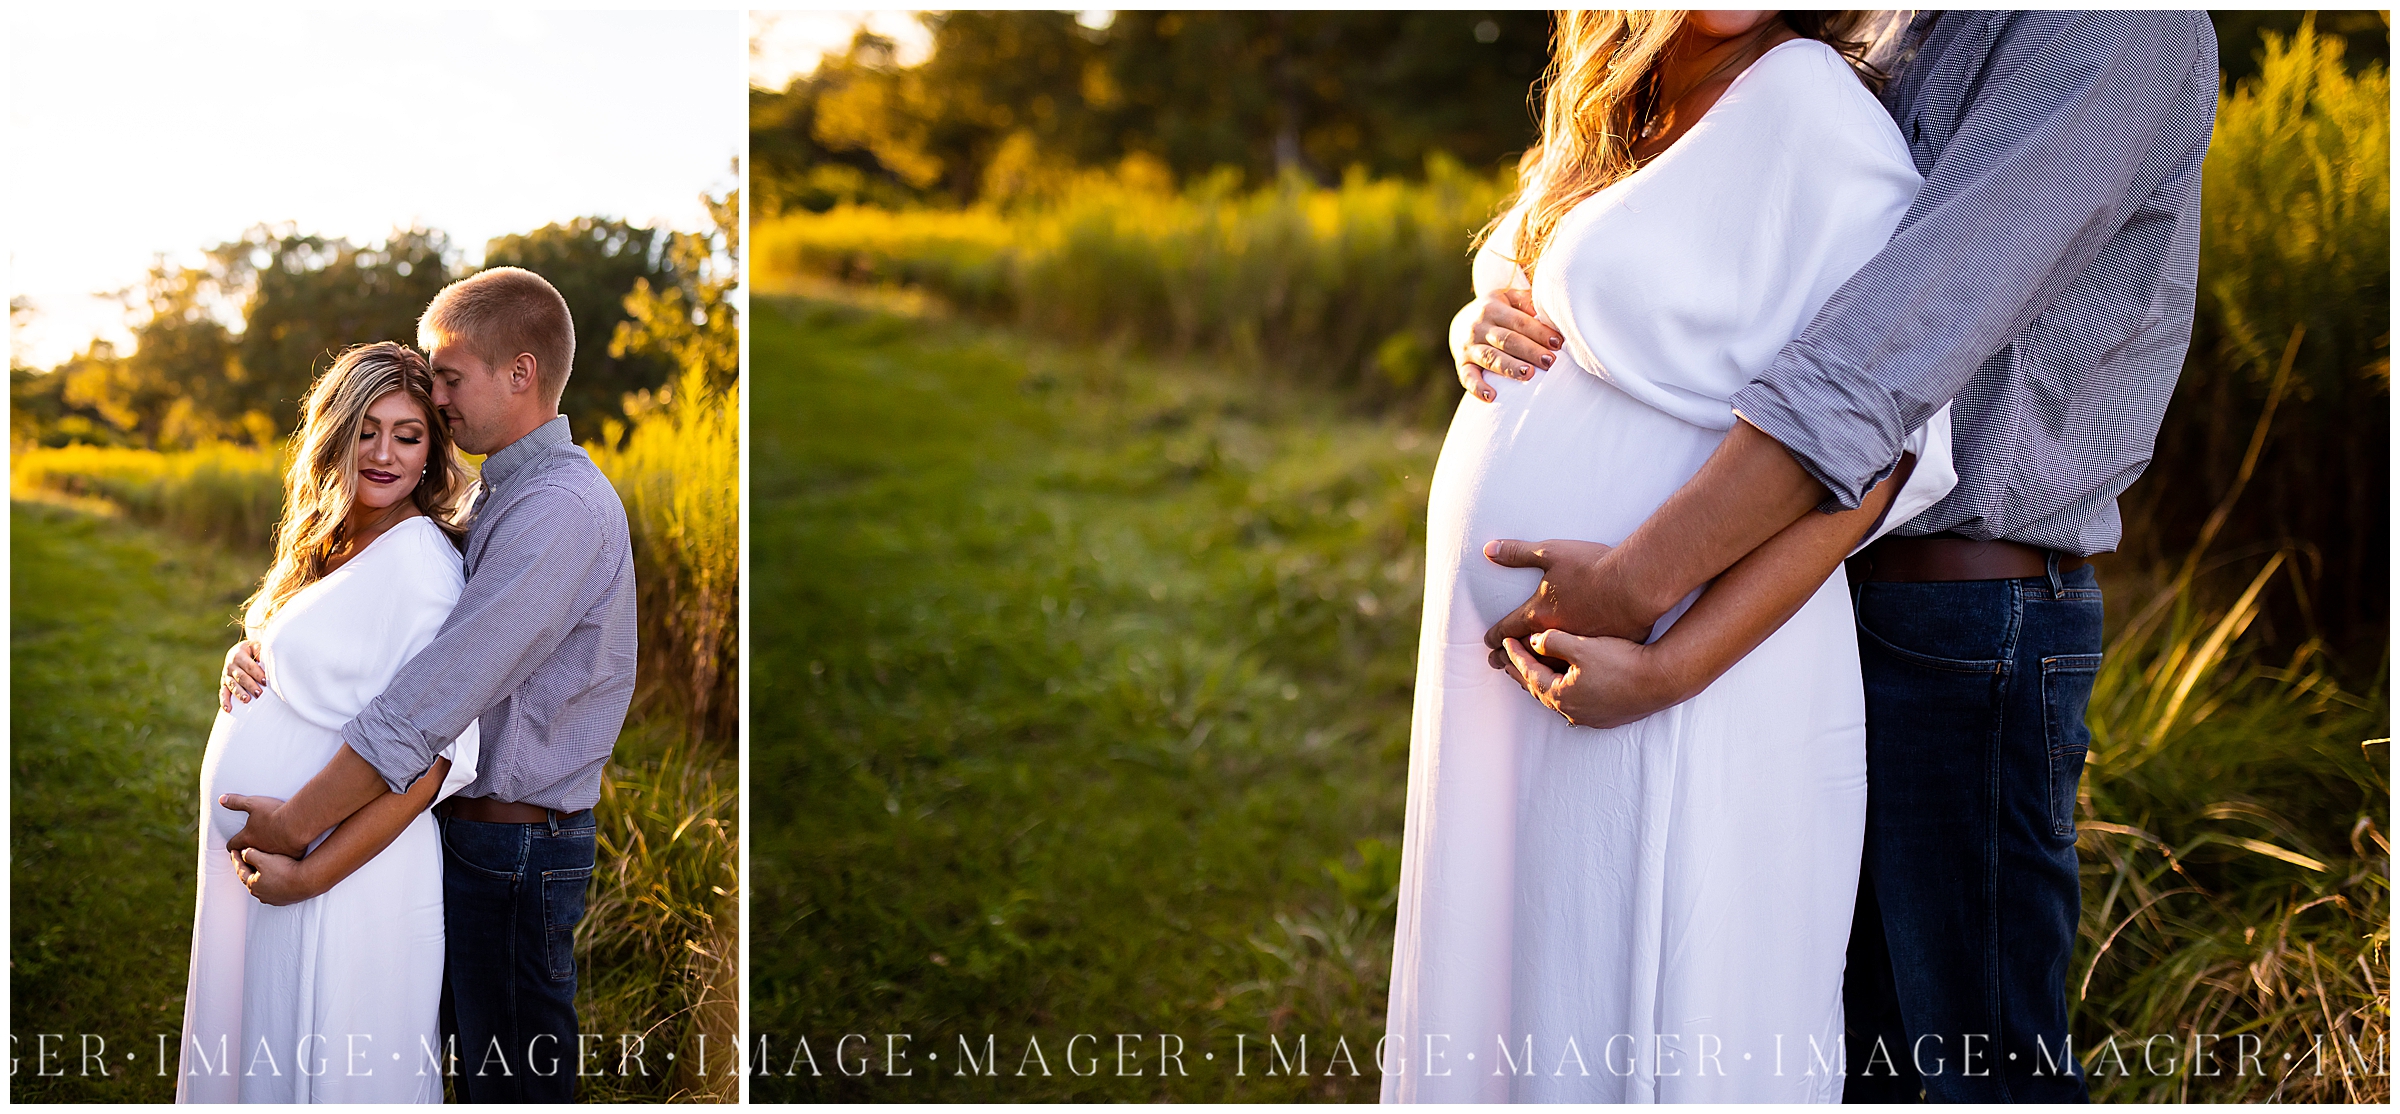 paxton-maternity-baby-middlefork-grass-nature-sunset